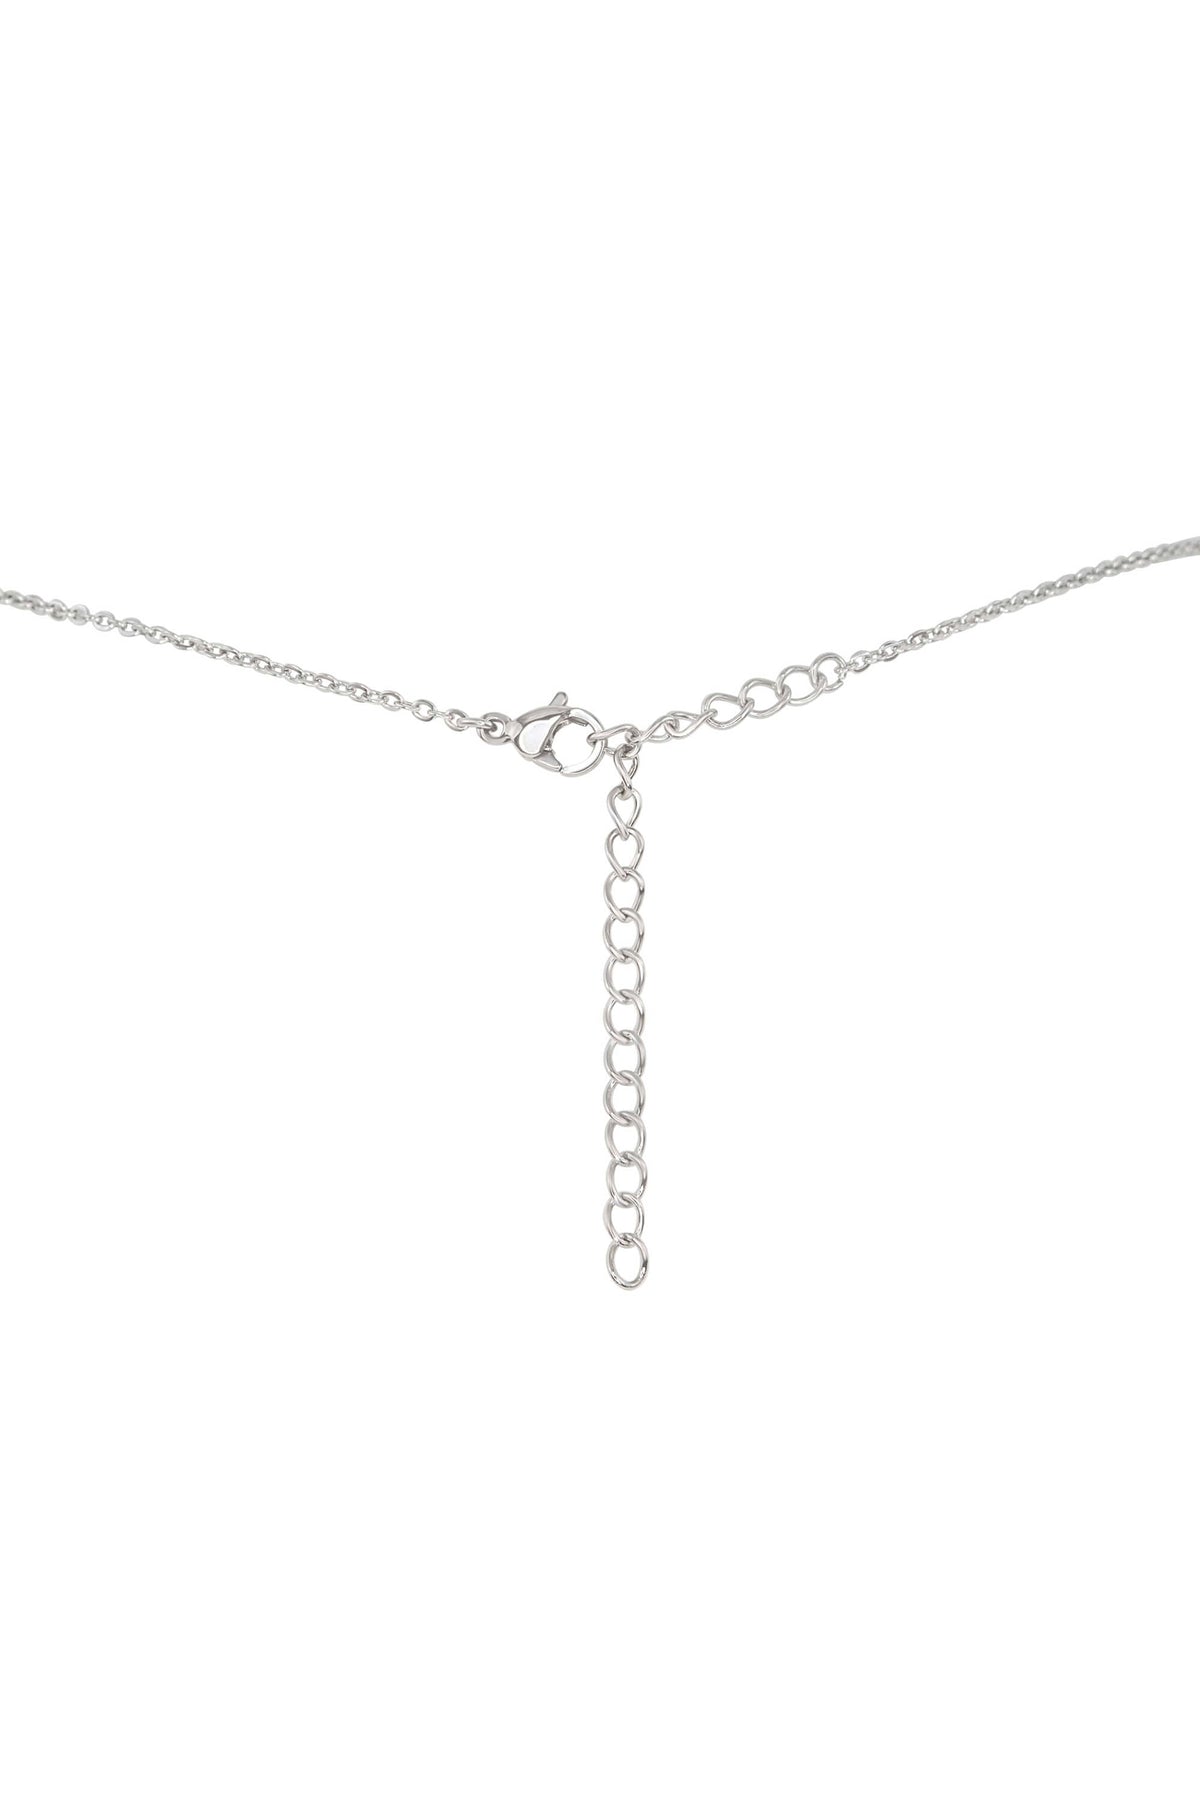 Raw Crystal Pendant Choker - Amethyst - Stainless Steel - Luna Tide Handmade Jewellery